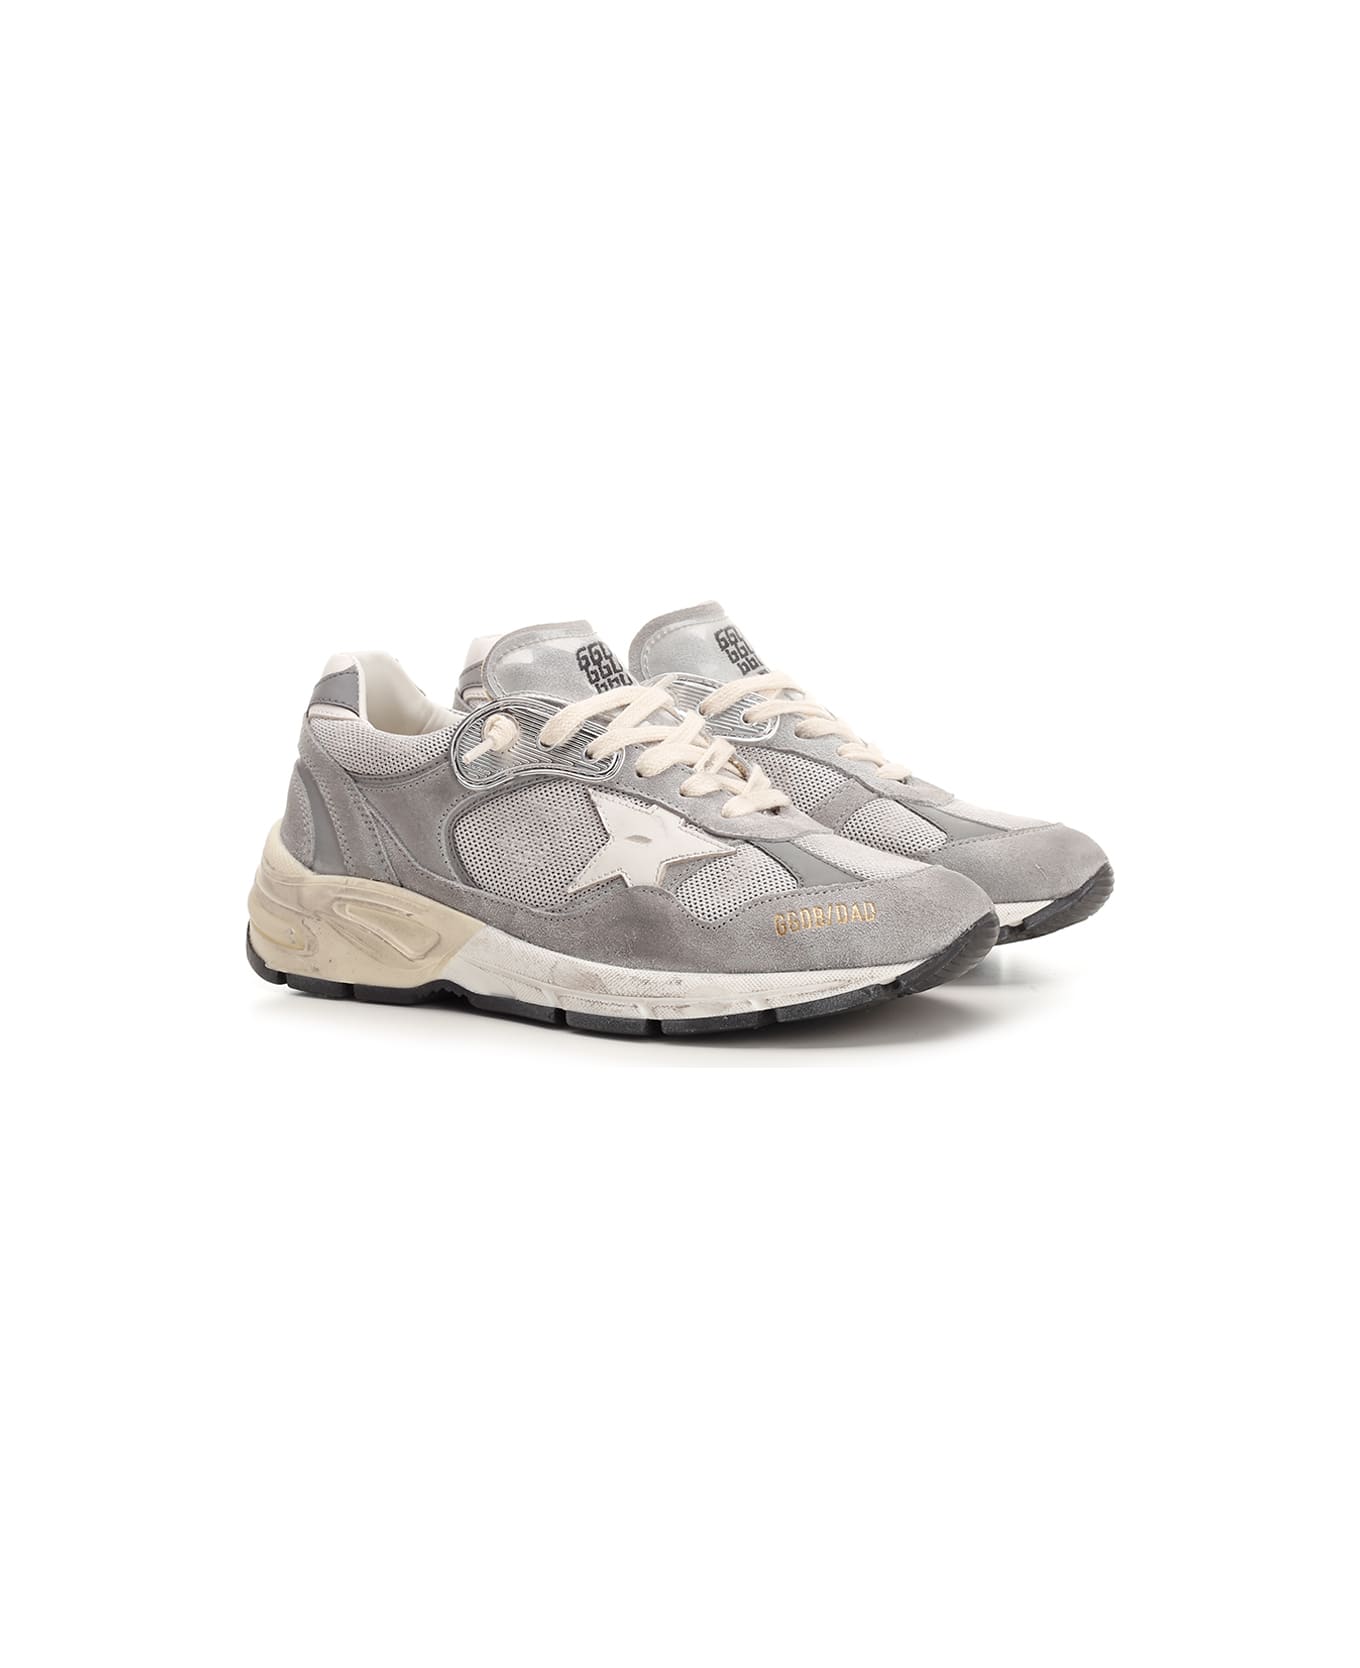 Golden Goose Running Dad Sneakers - Grey/Silver/White スニーカー